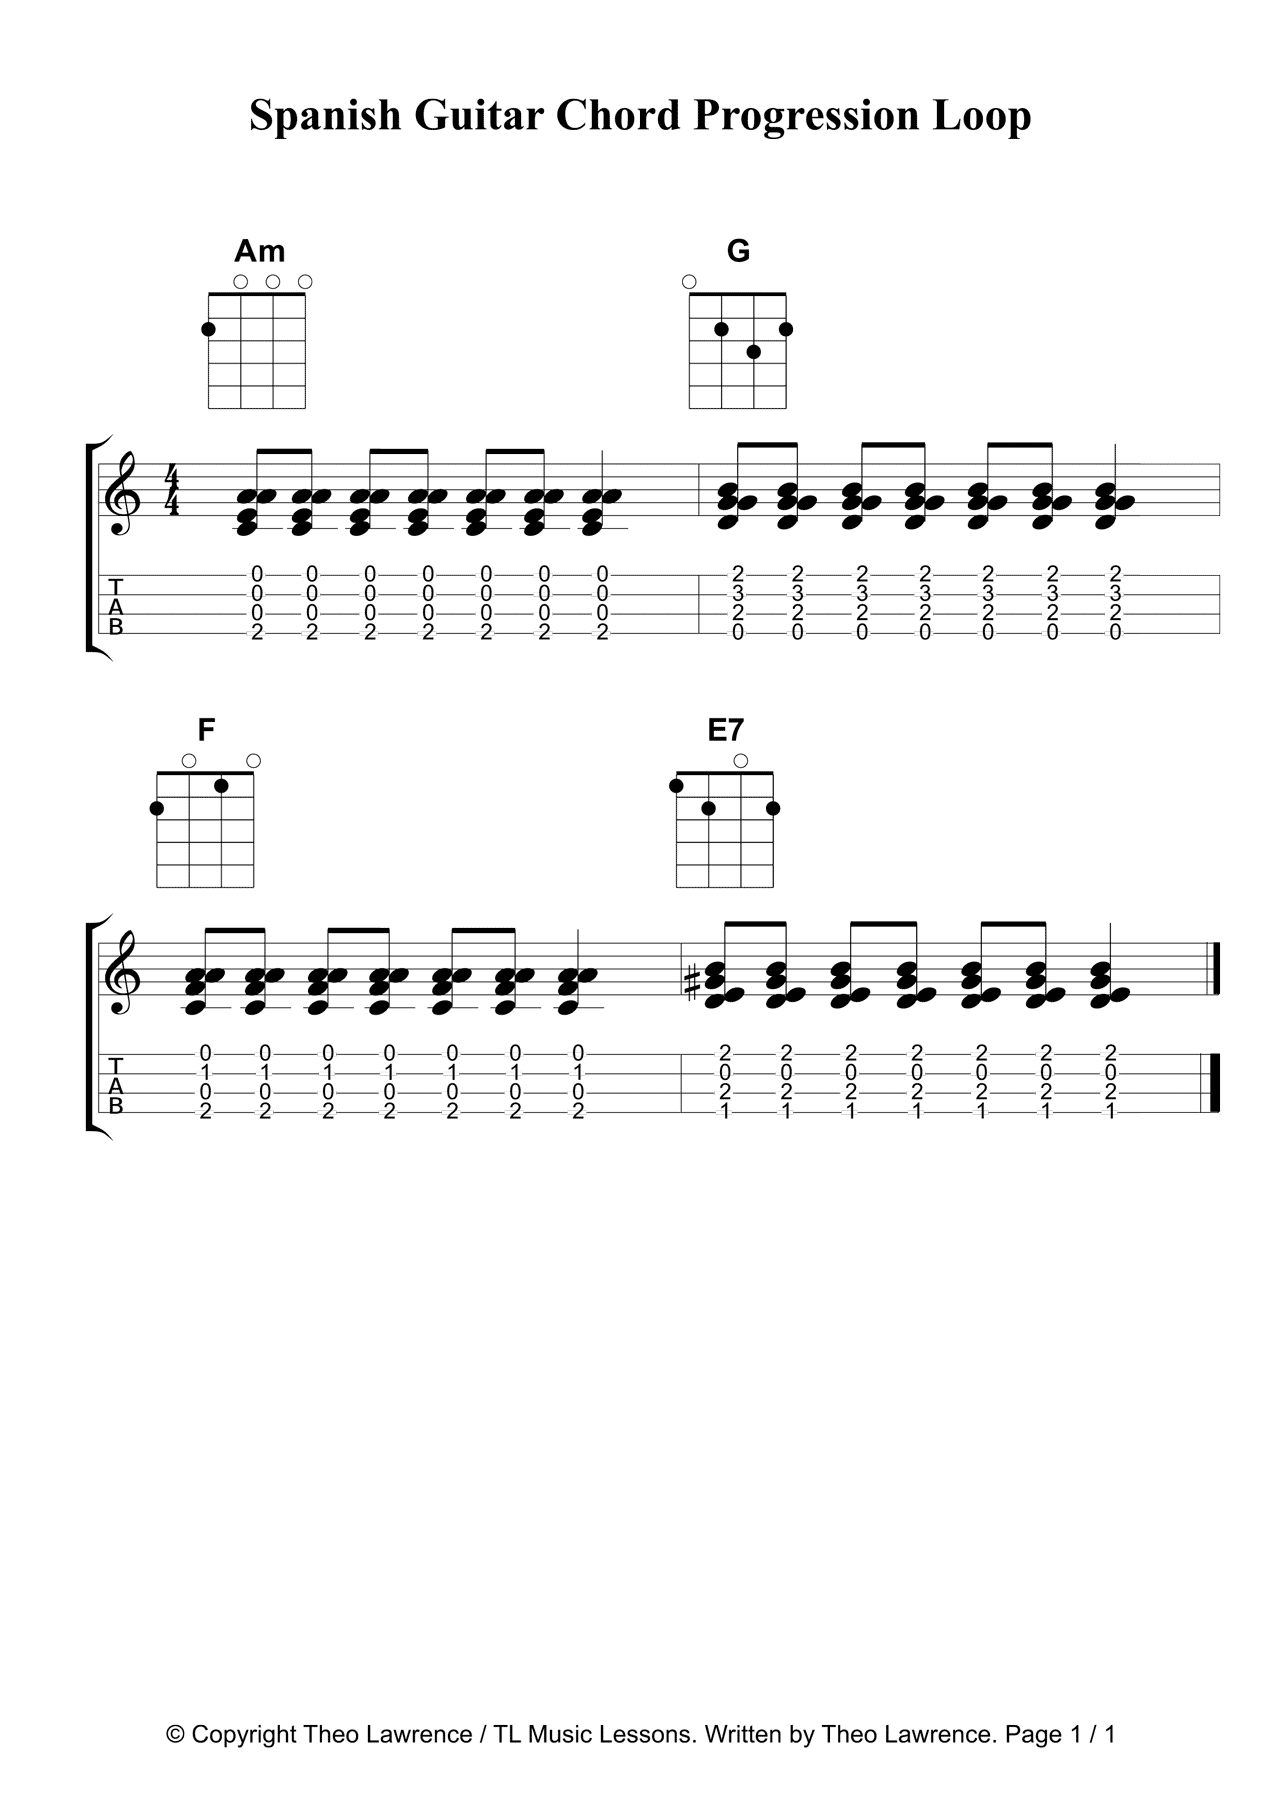 flamenco chords pdf download